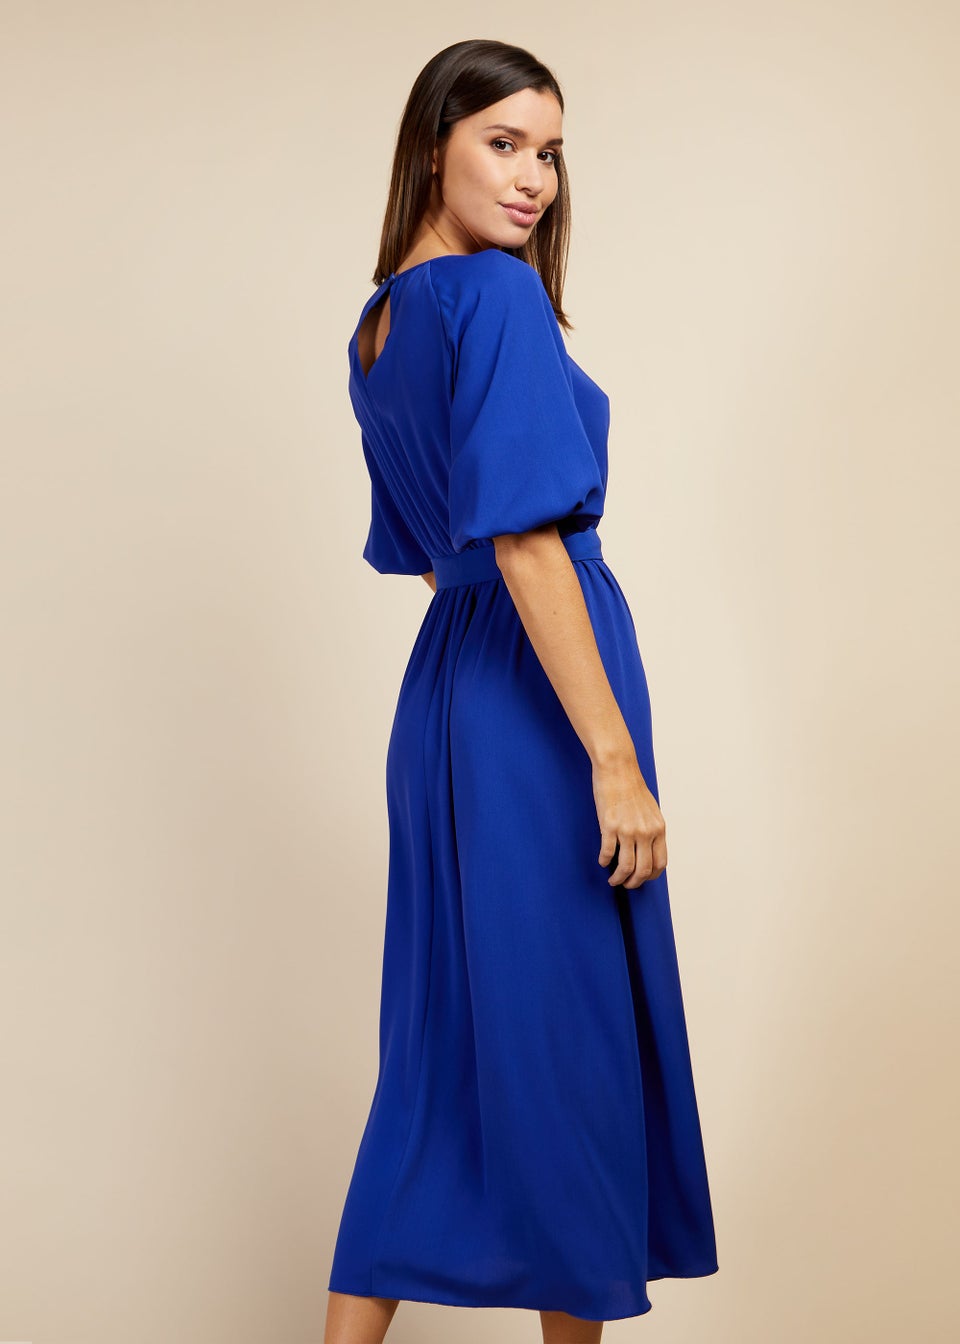 Little Mistress by Vogue Williams Royal Blue Woven Midi Dress - Matalan